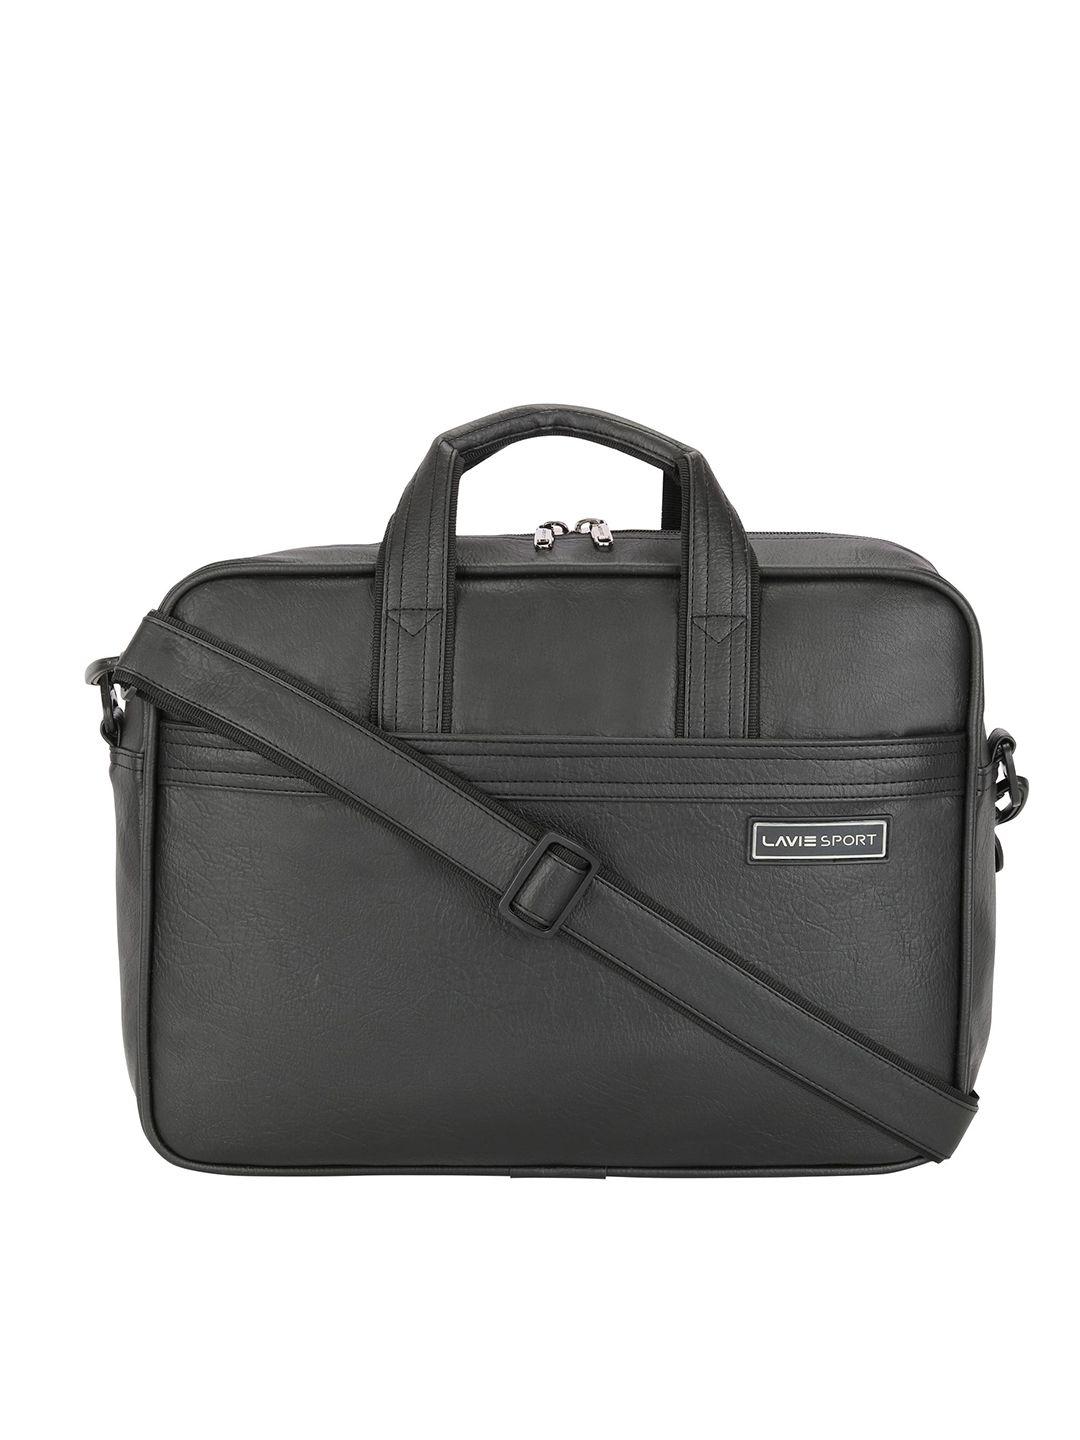 lavie sport unisex black director laptop briefcase bag